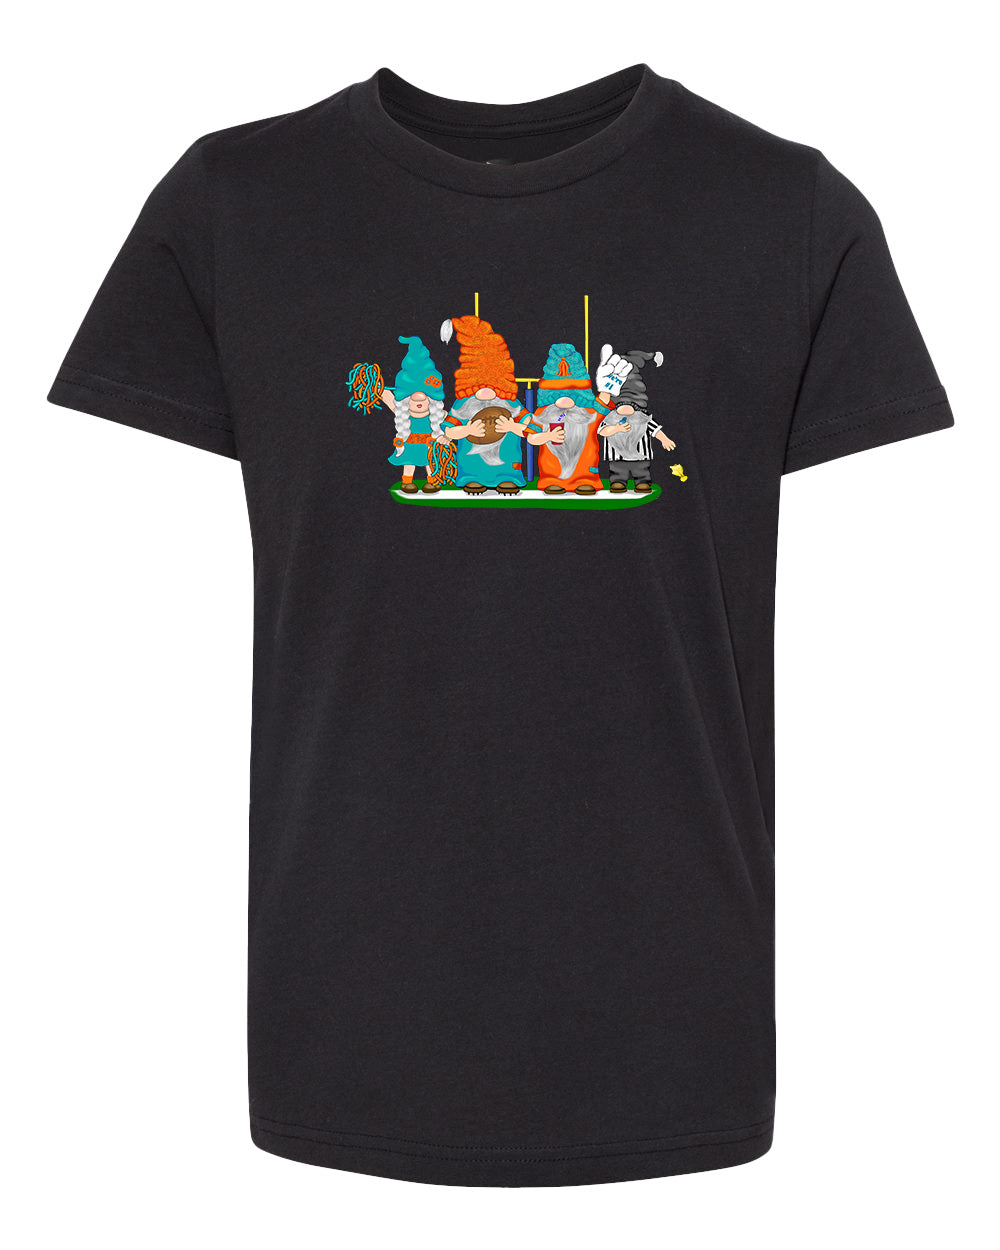 Aqua & Orange Football Gnomes  (similar to Miami) on Kids T-shirt